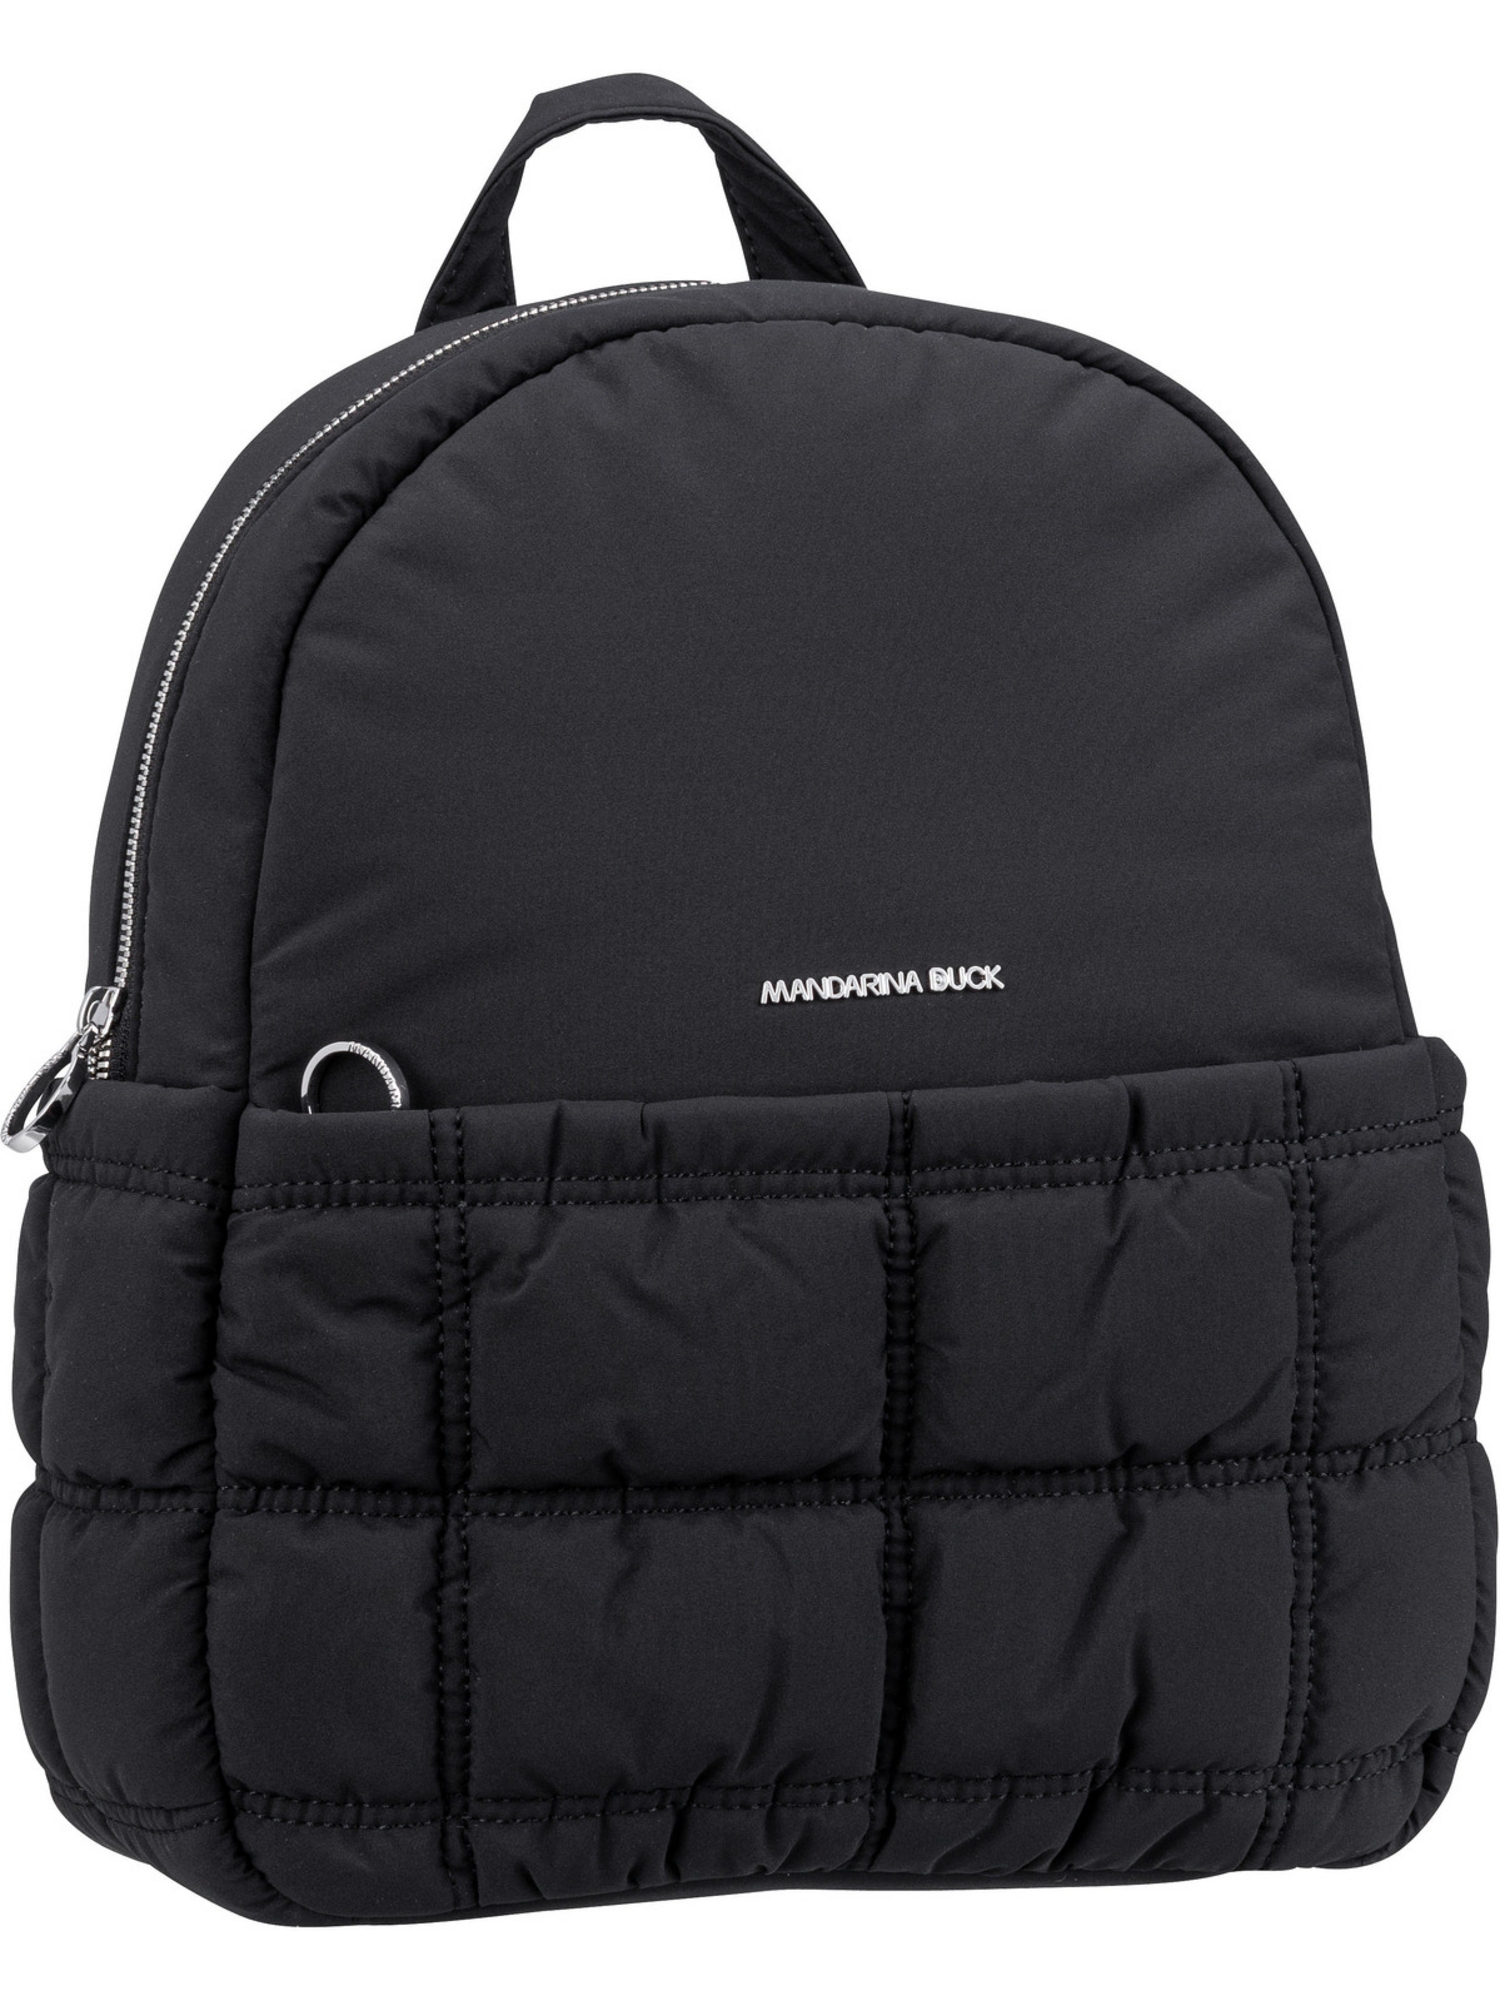 Рюкзак Mandarina Duck/Backpack Pillow Dream Backpack ODT07, черный